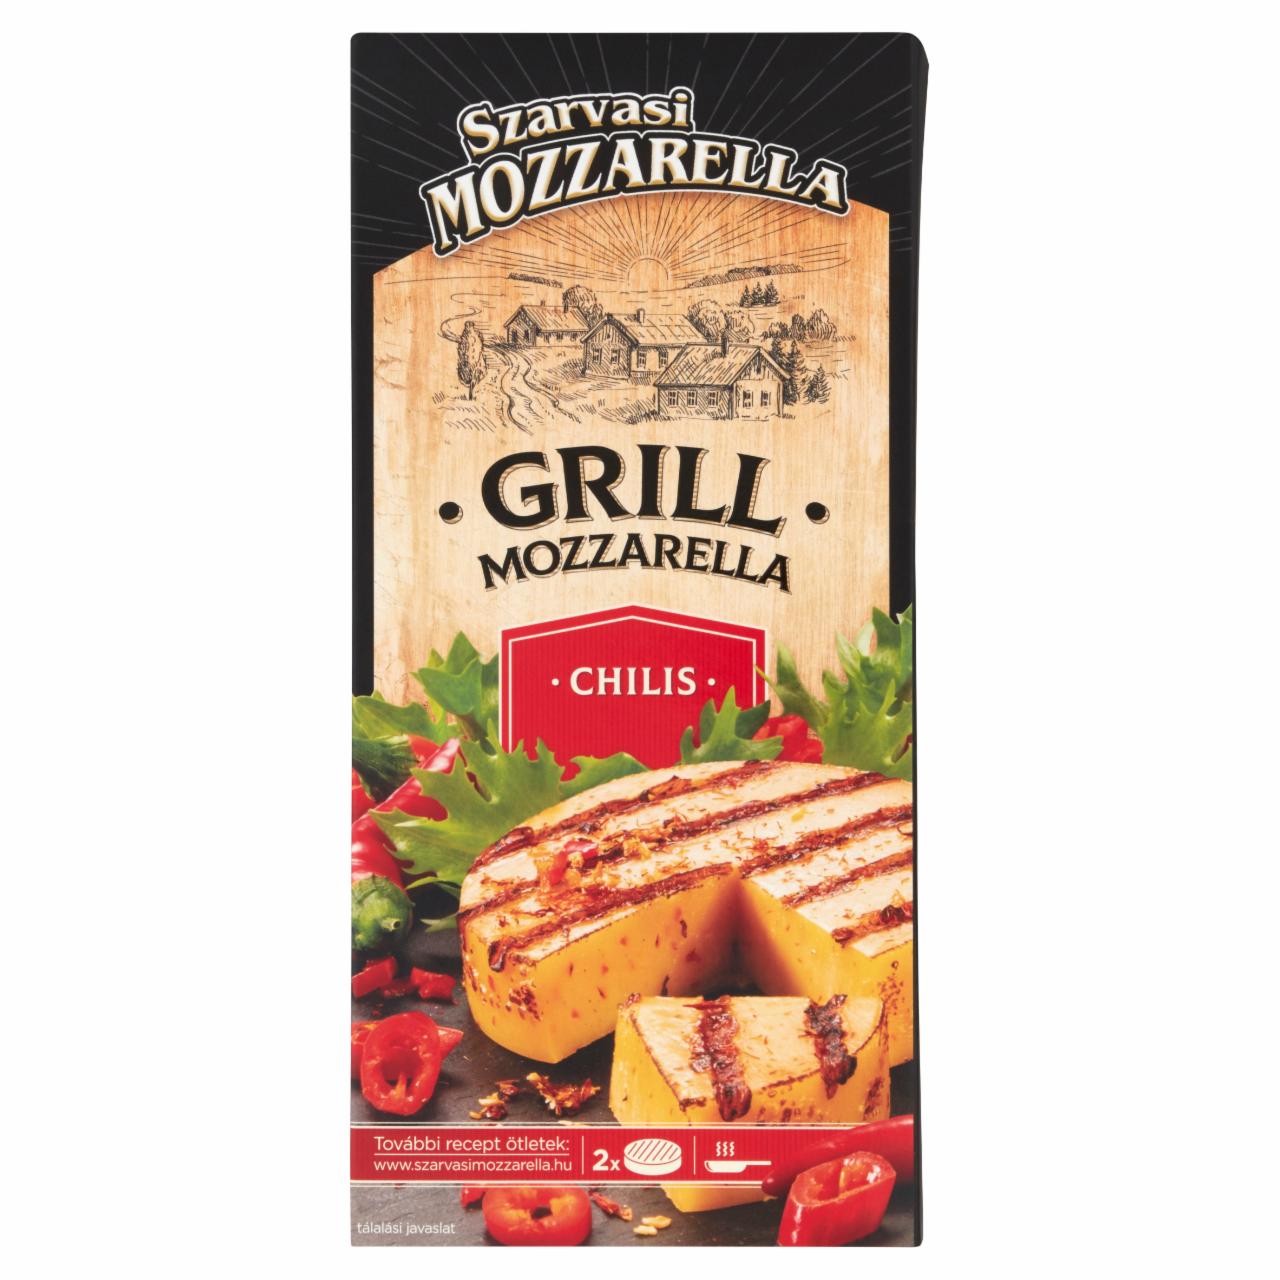 Képek - Szarvasi Mozzarella chilis grill mozzarella 2 x 75 g (150 g)